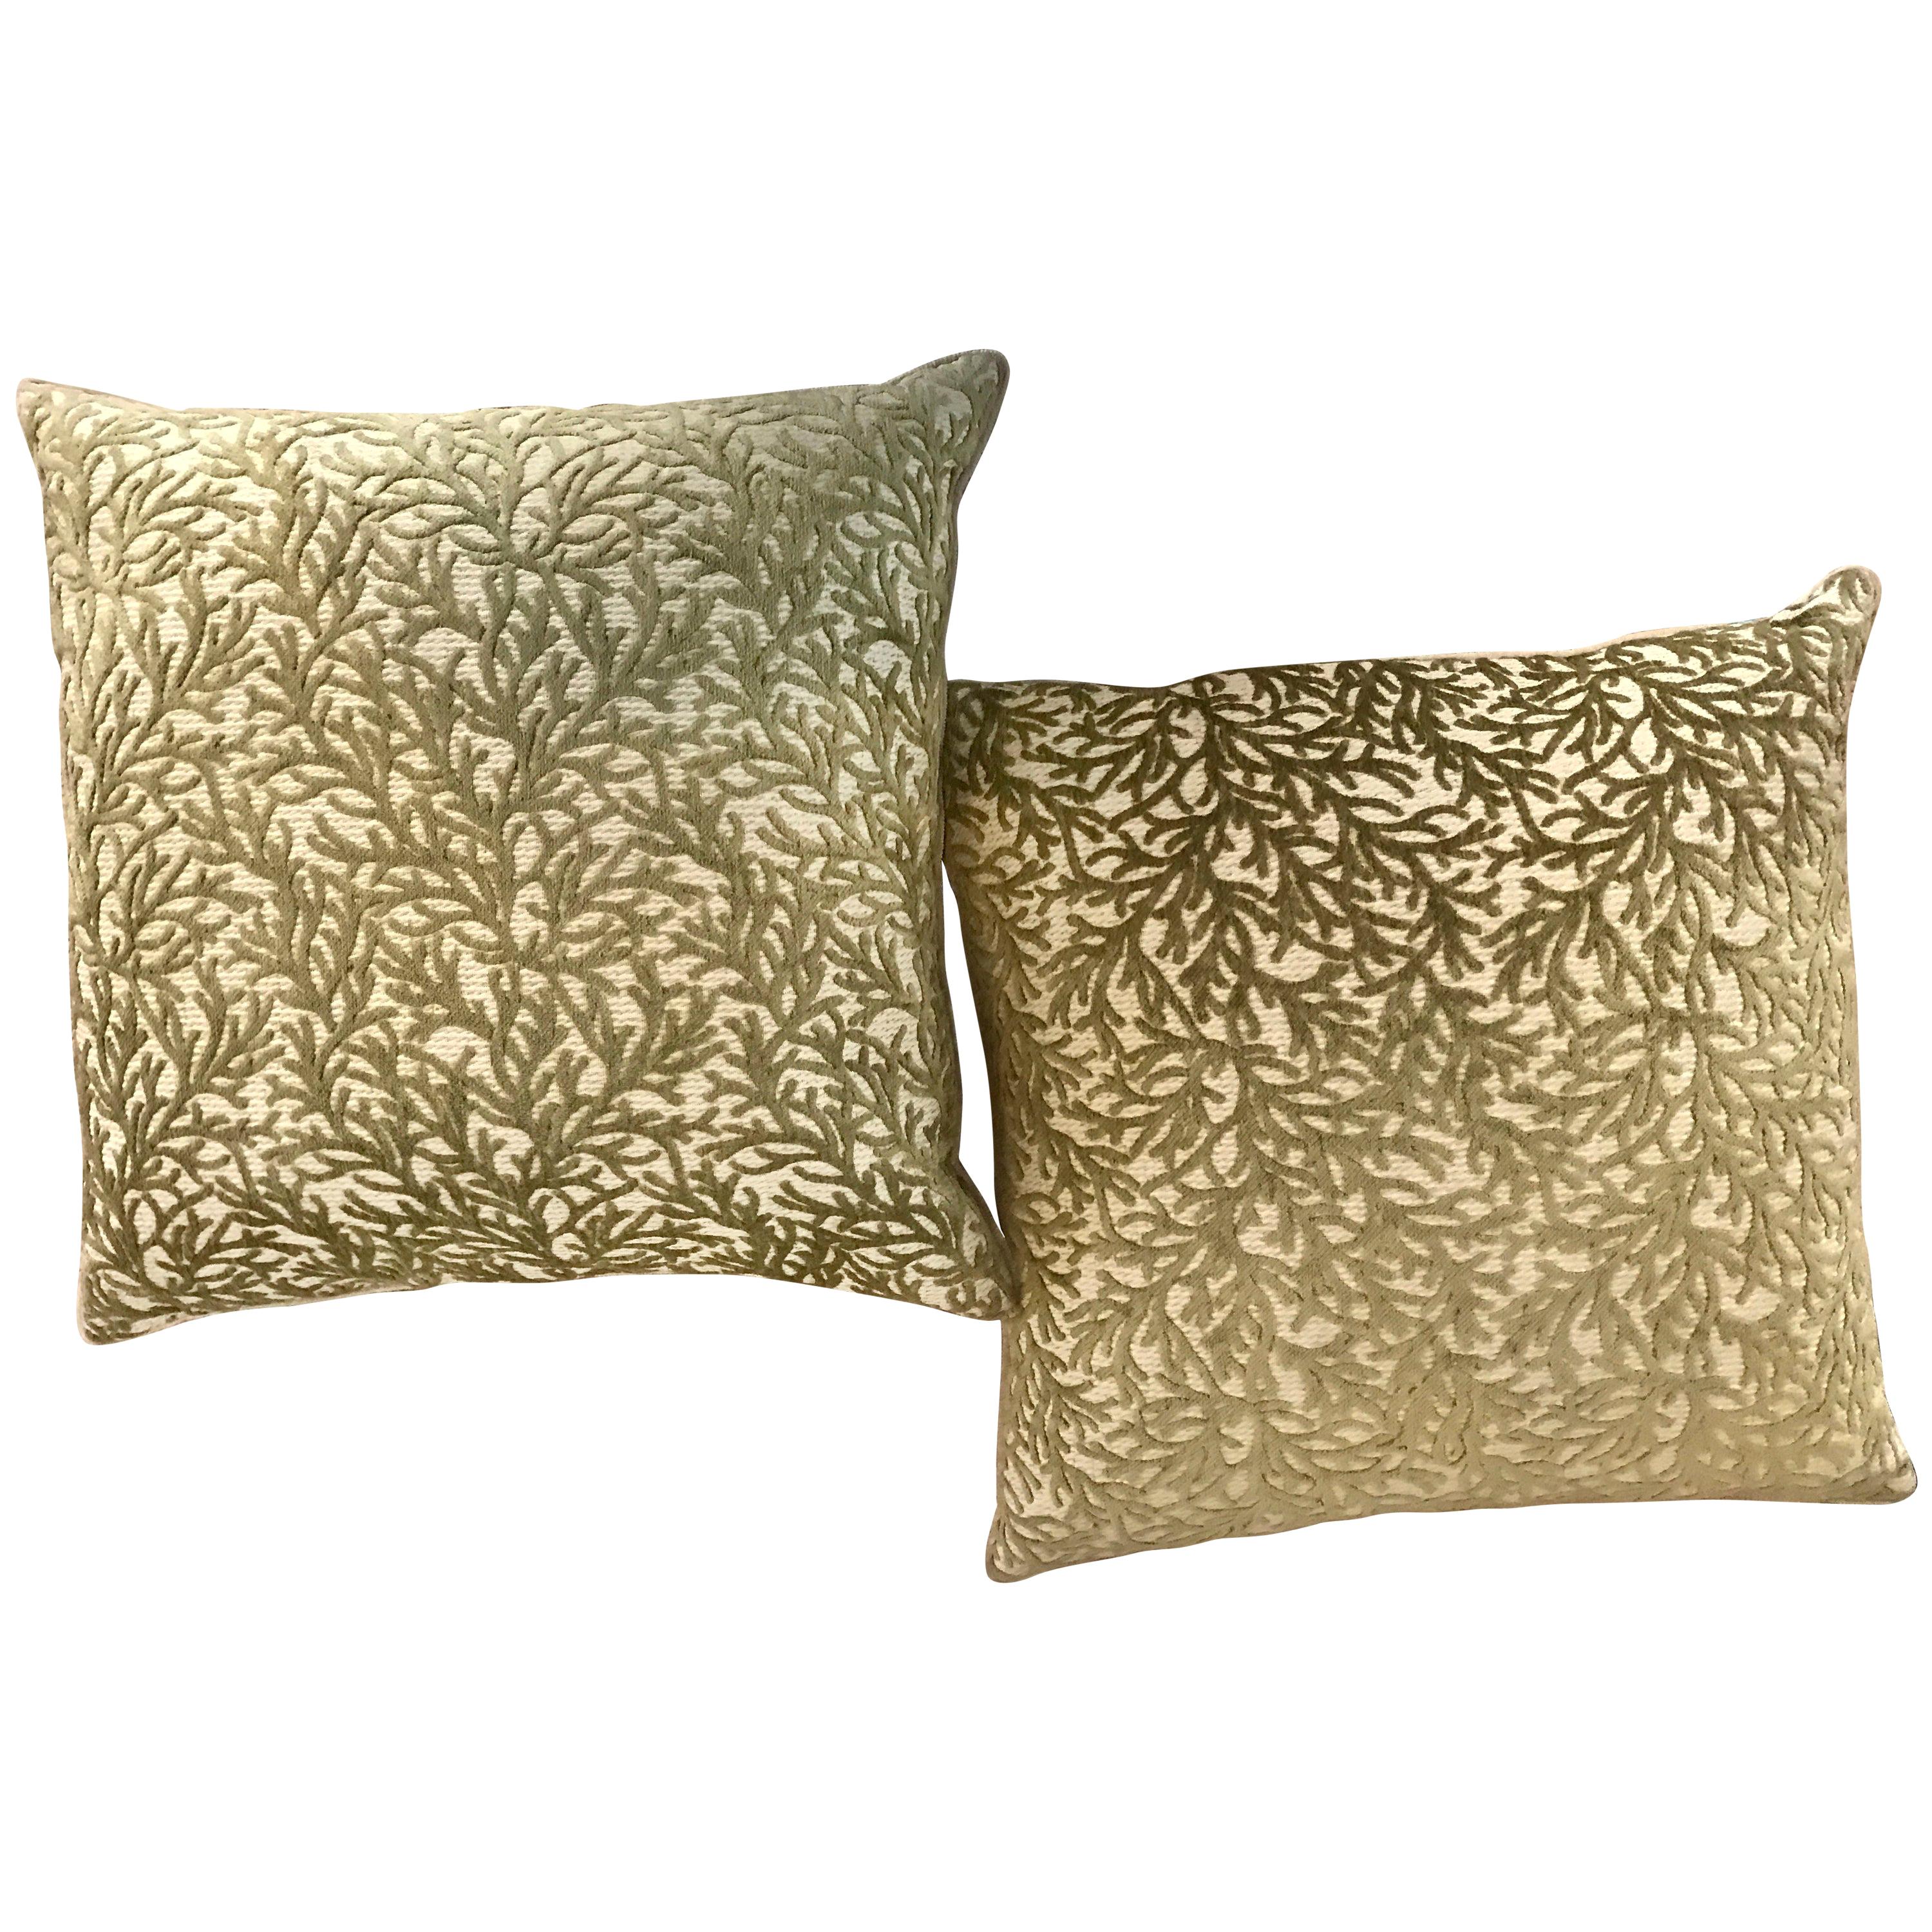  Pair of Sage Coral Cut Velvet Modern Design Throw Pillows For Sale